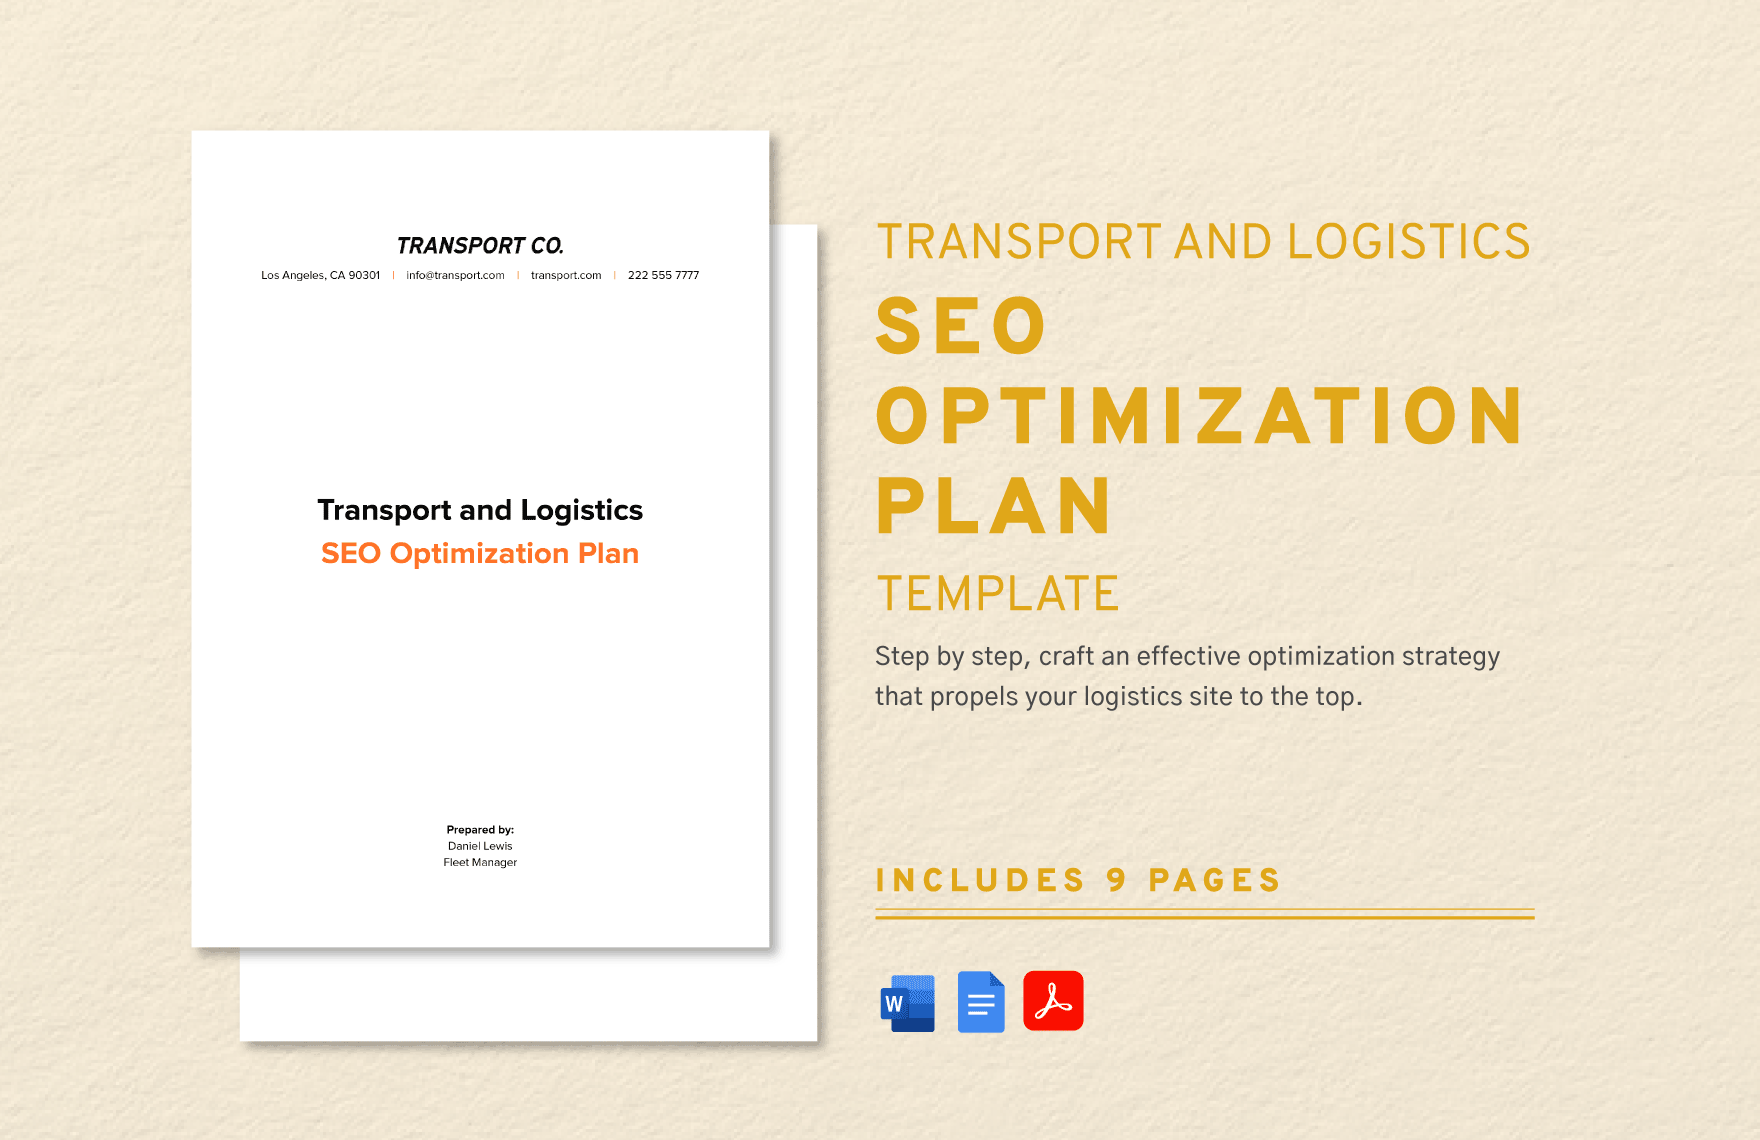 Transport and Logistics SEO Optimization Plan Template